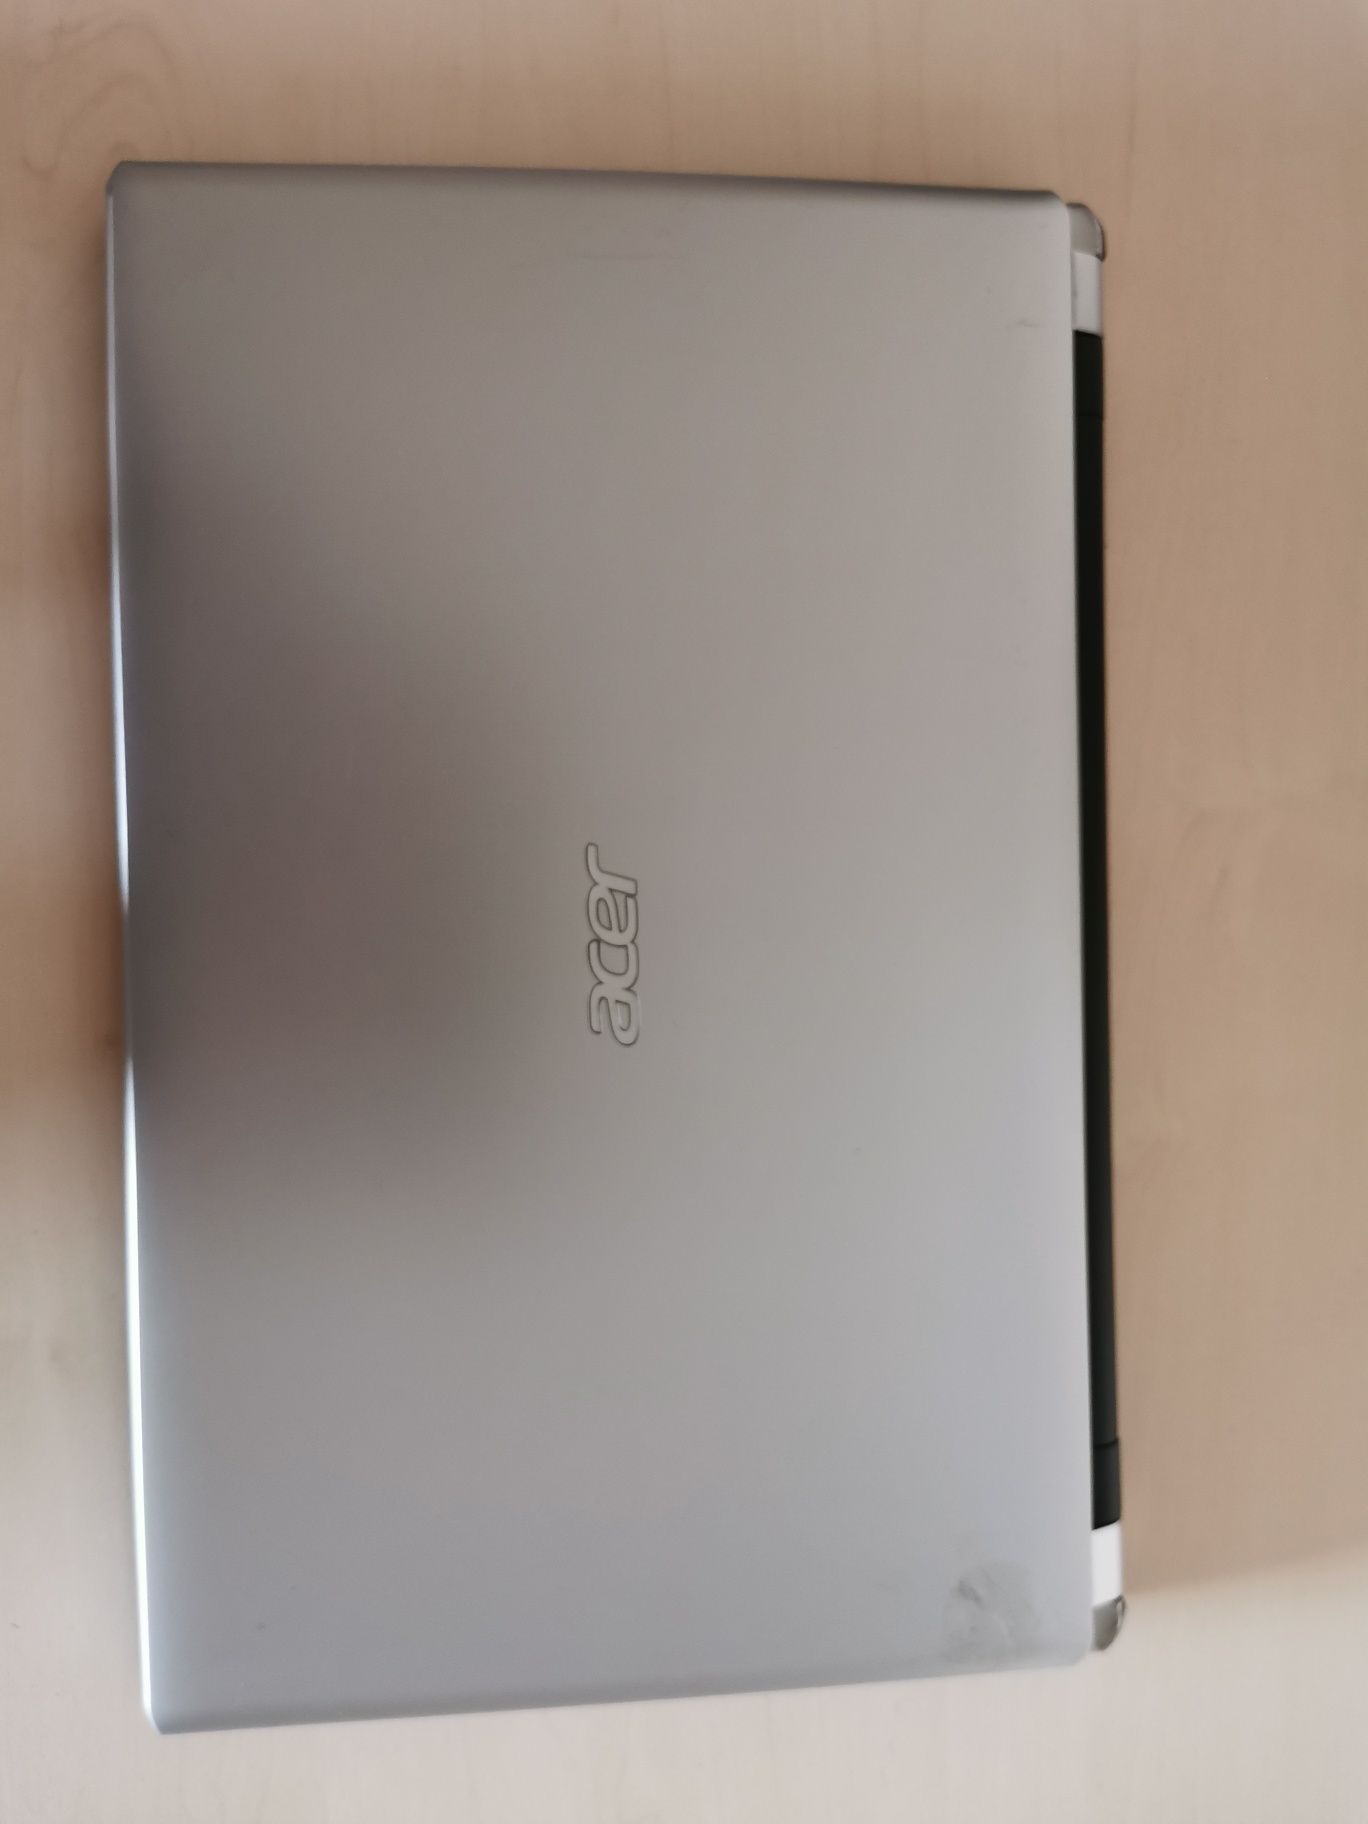 Laptop Acer v5-571 
Intel core i3-2377M 1.5Ghz